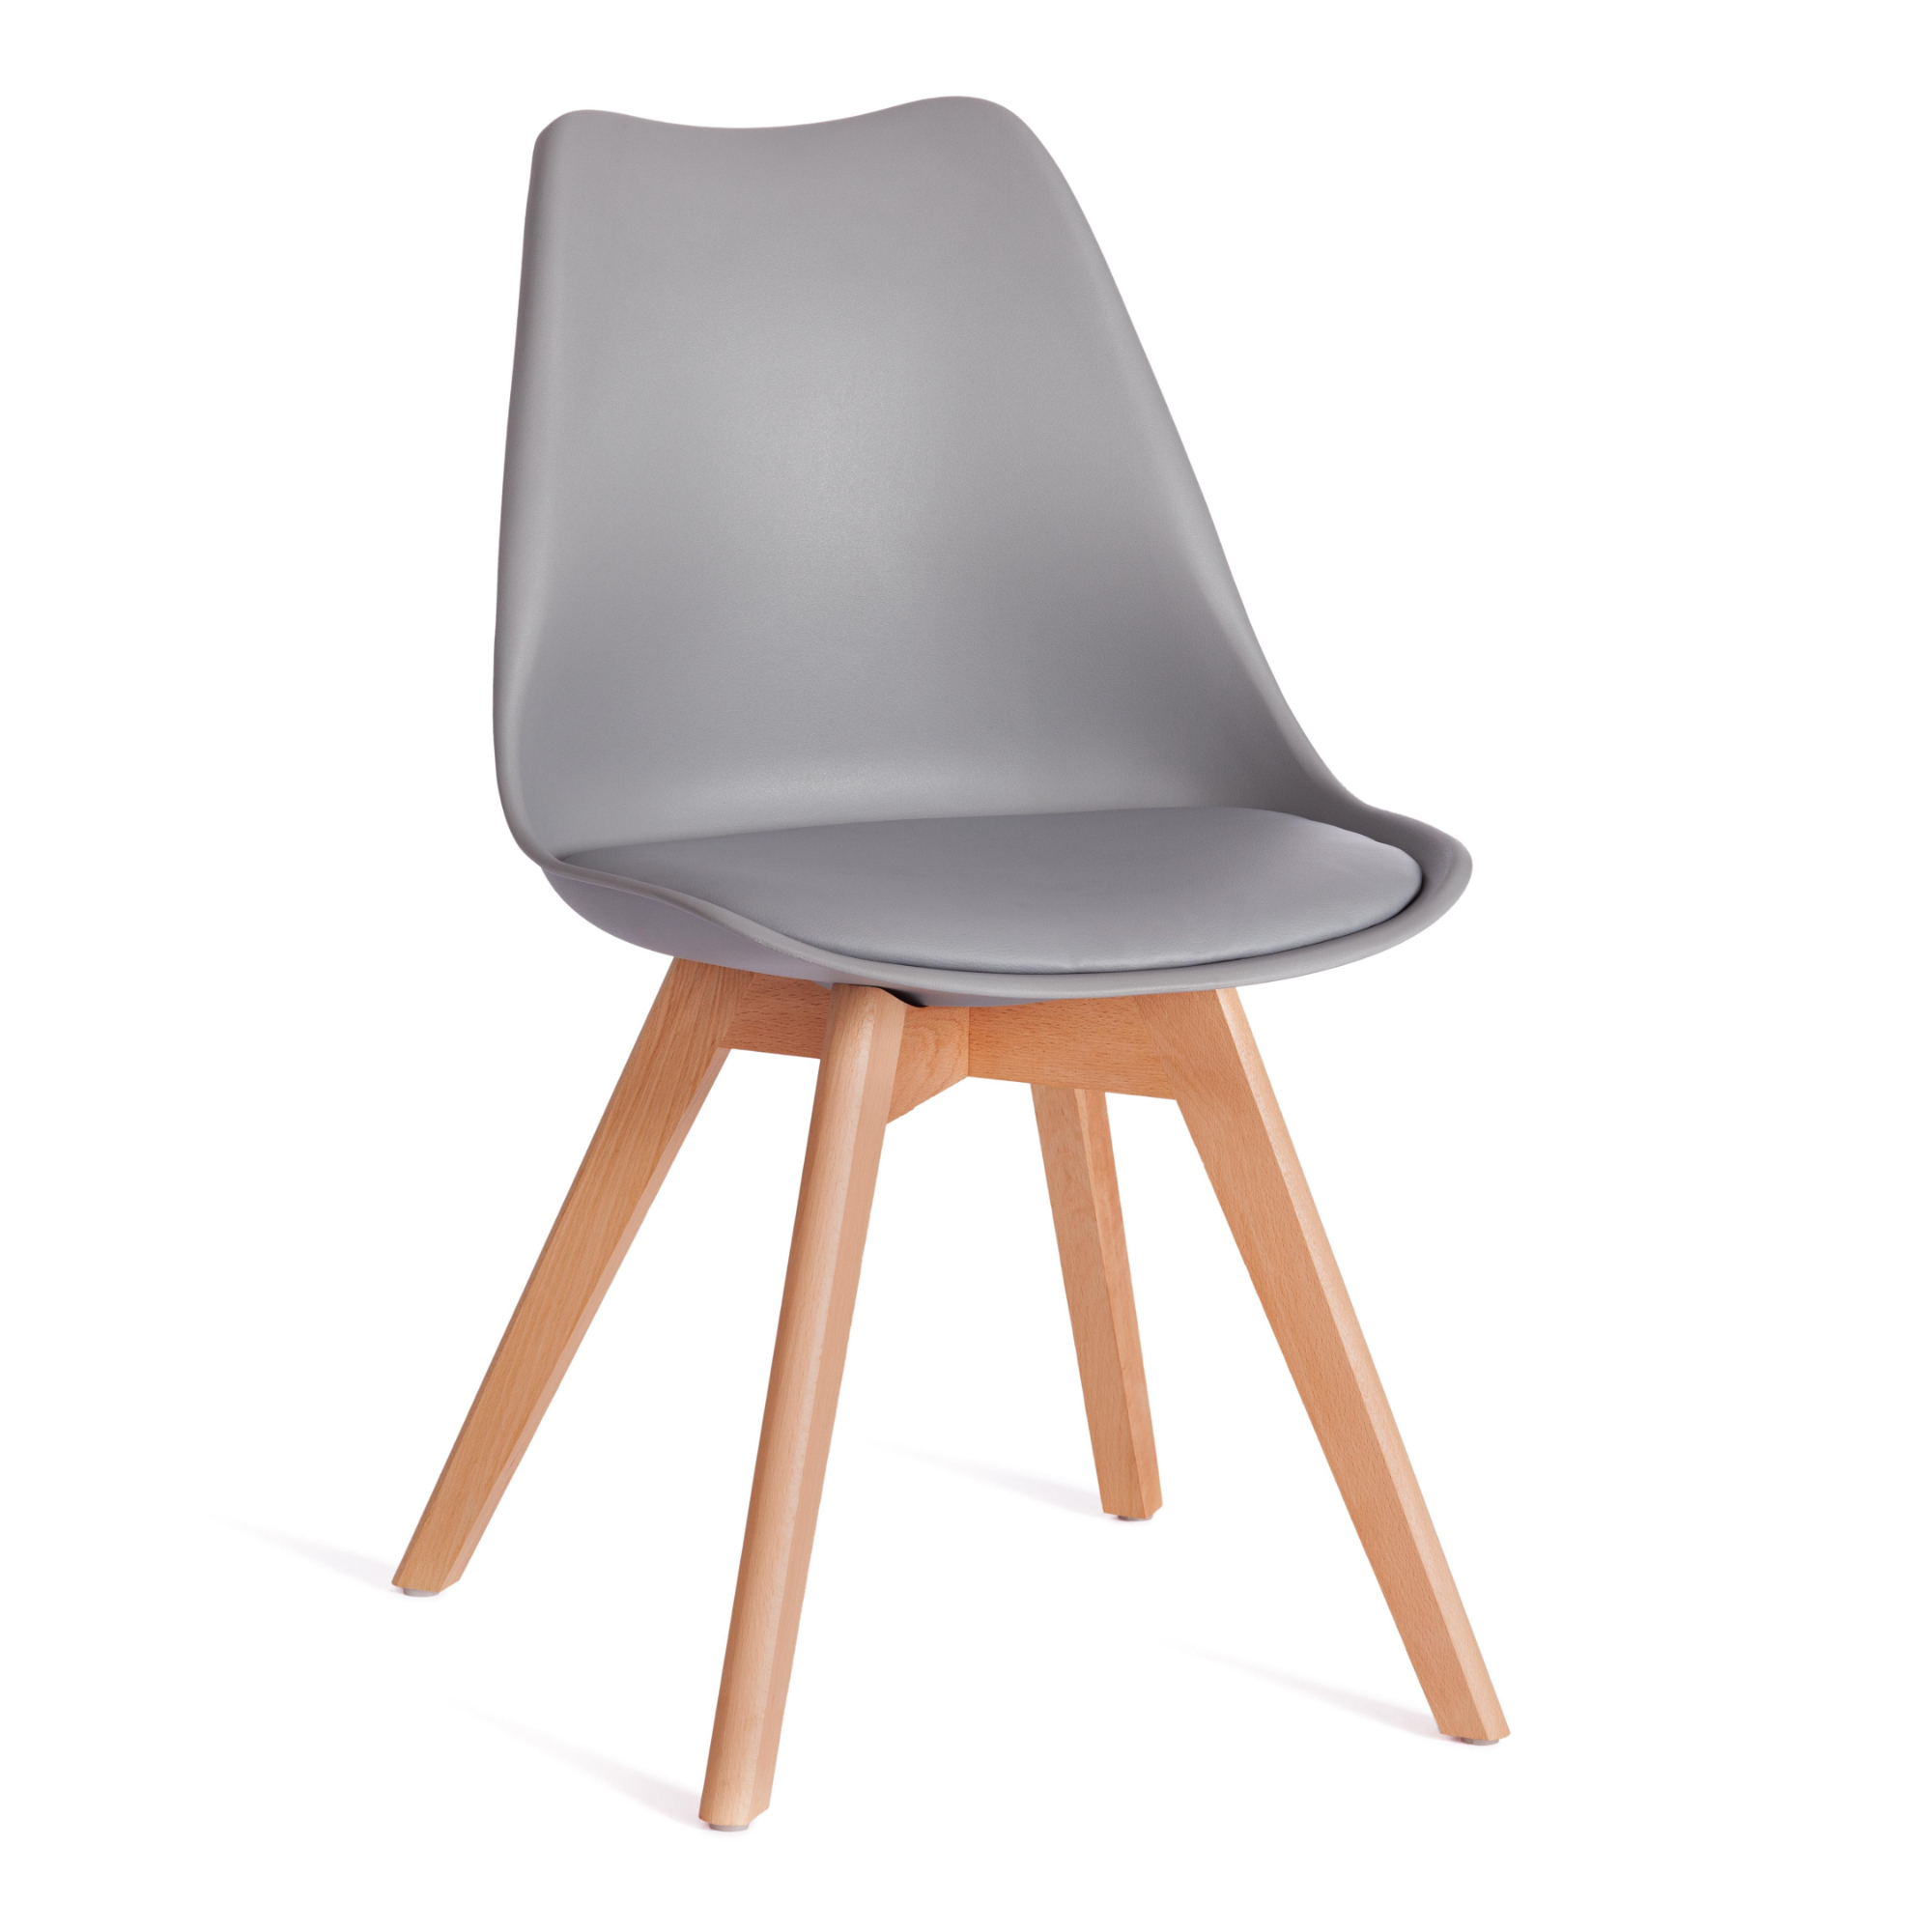 стул для кухни harbour пластик серый ножки дерево Стул ТС серый из дерева, пластика, экокожи 47,5x55x80 см